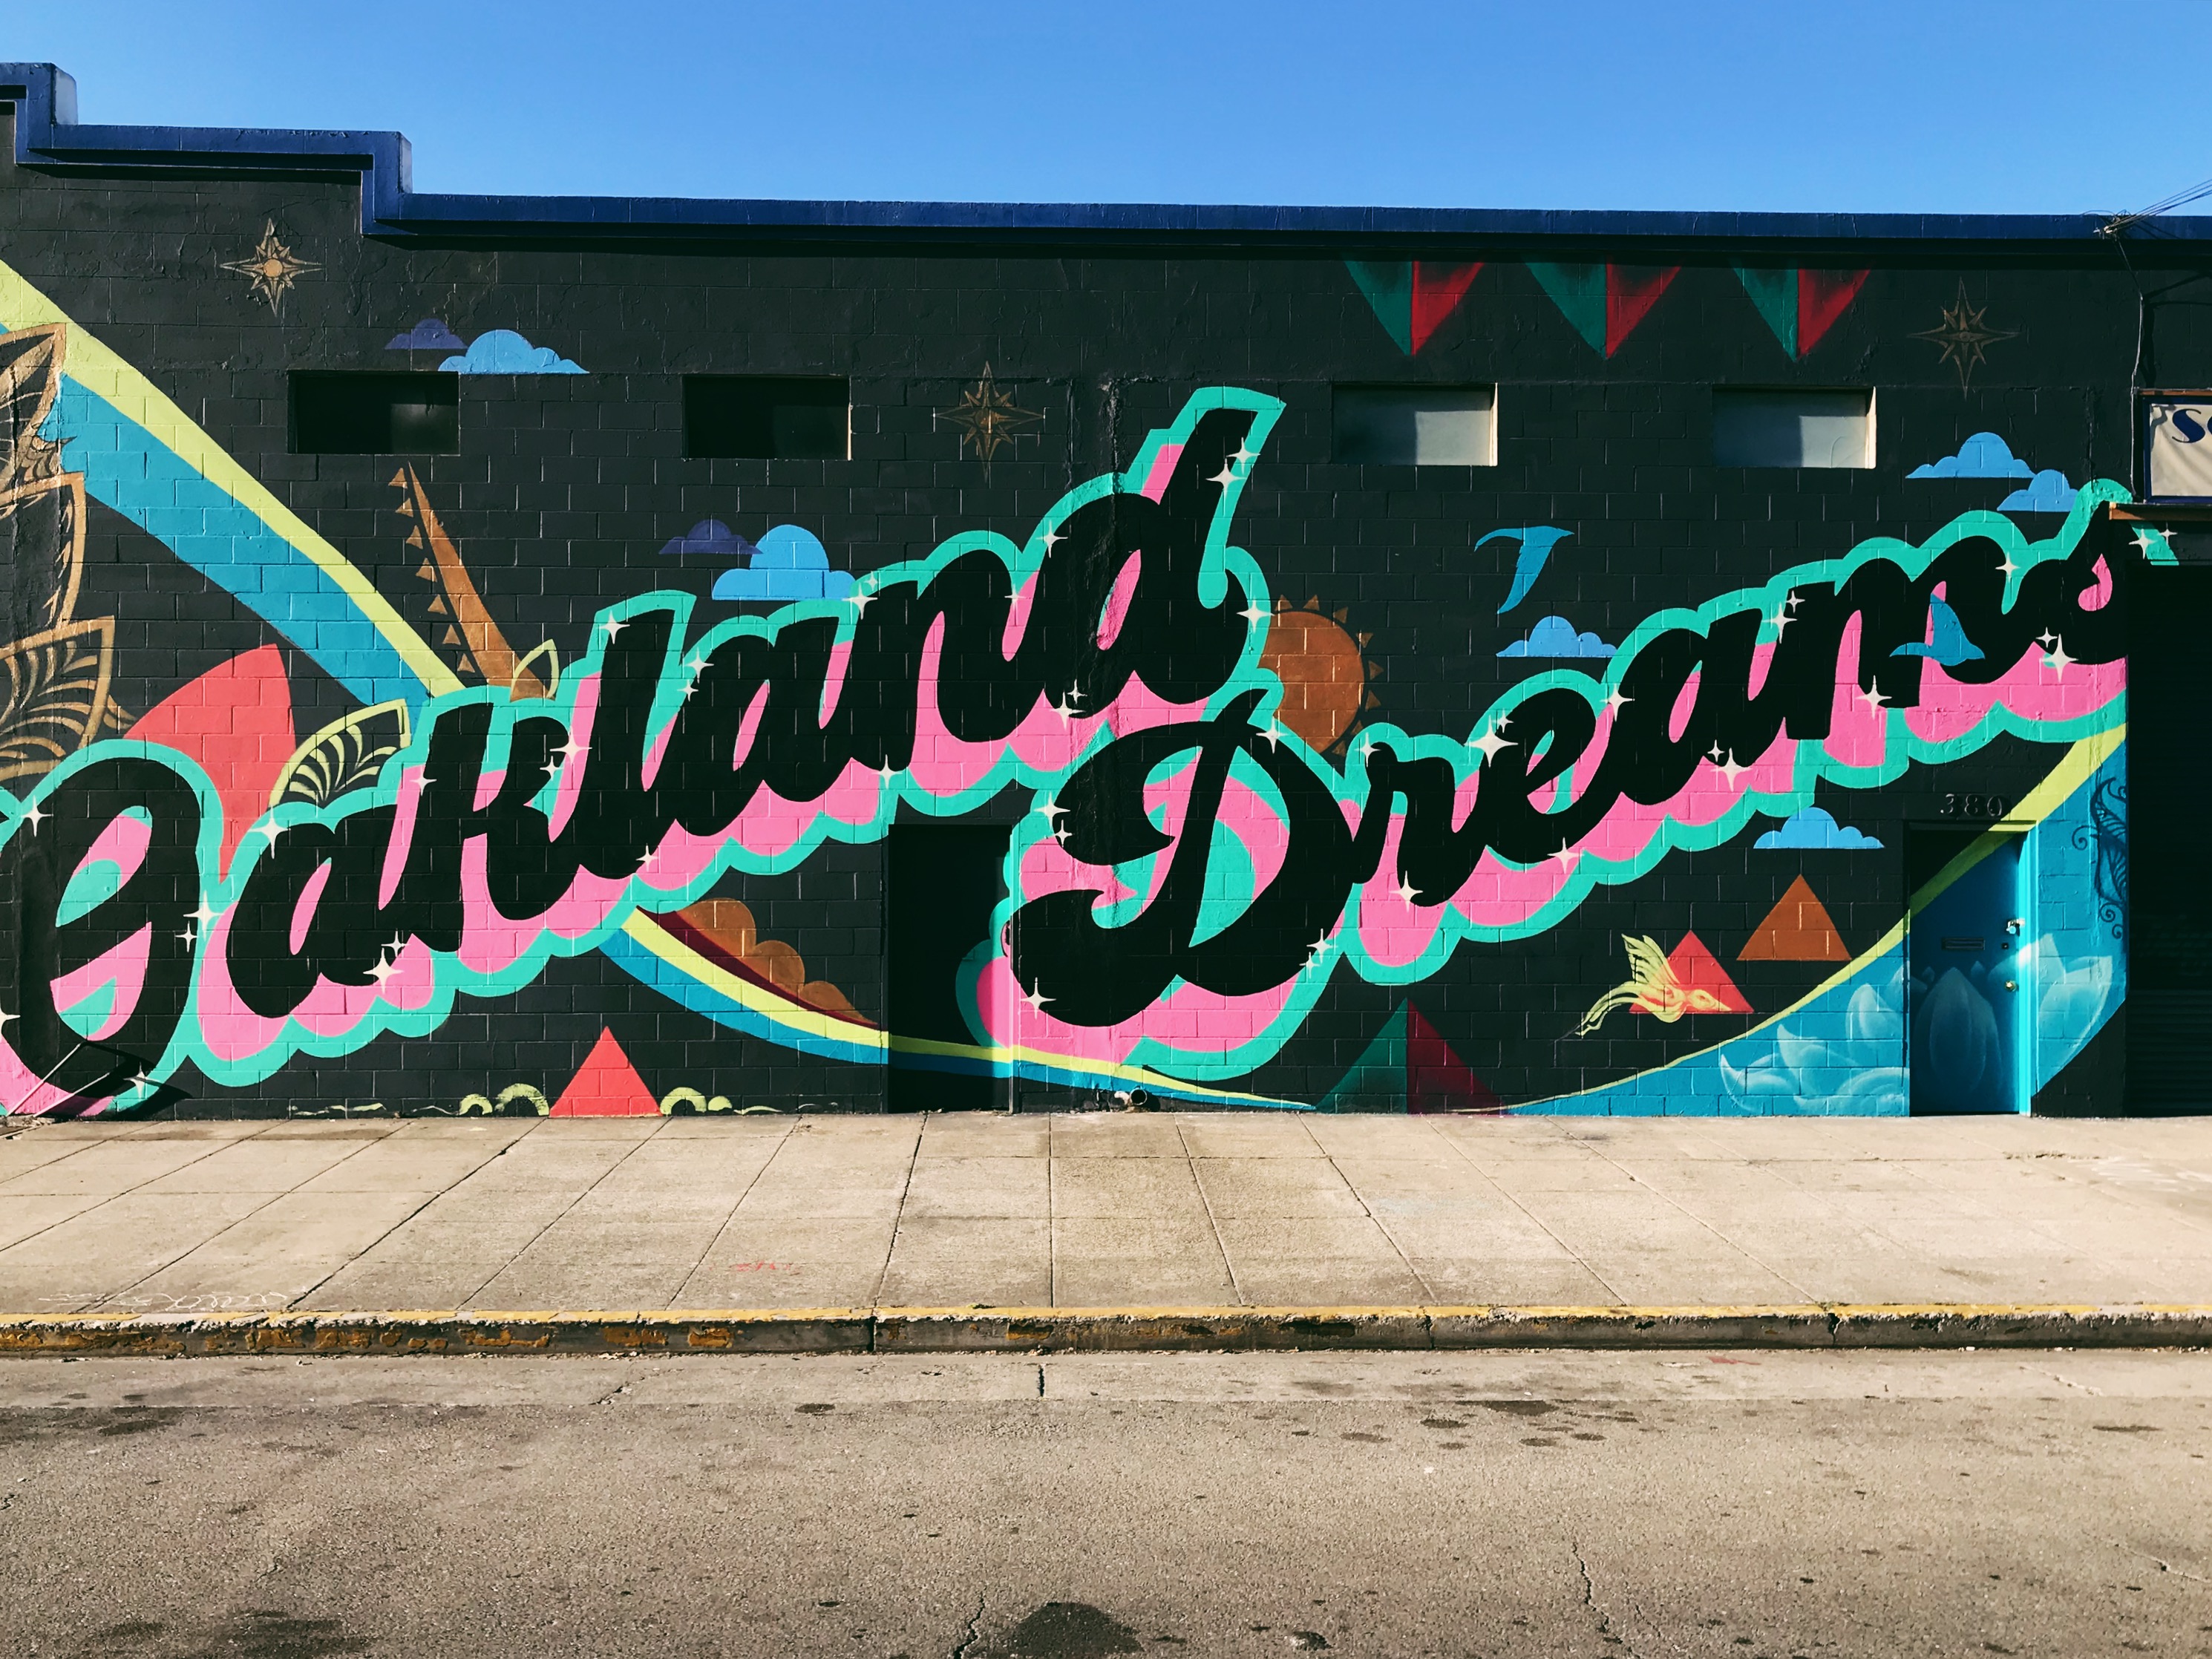 Oakland Dreams Mural